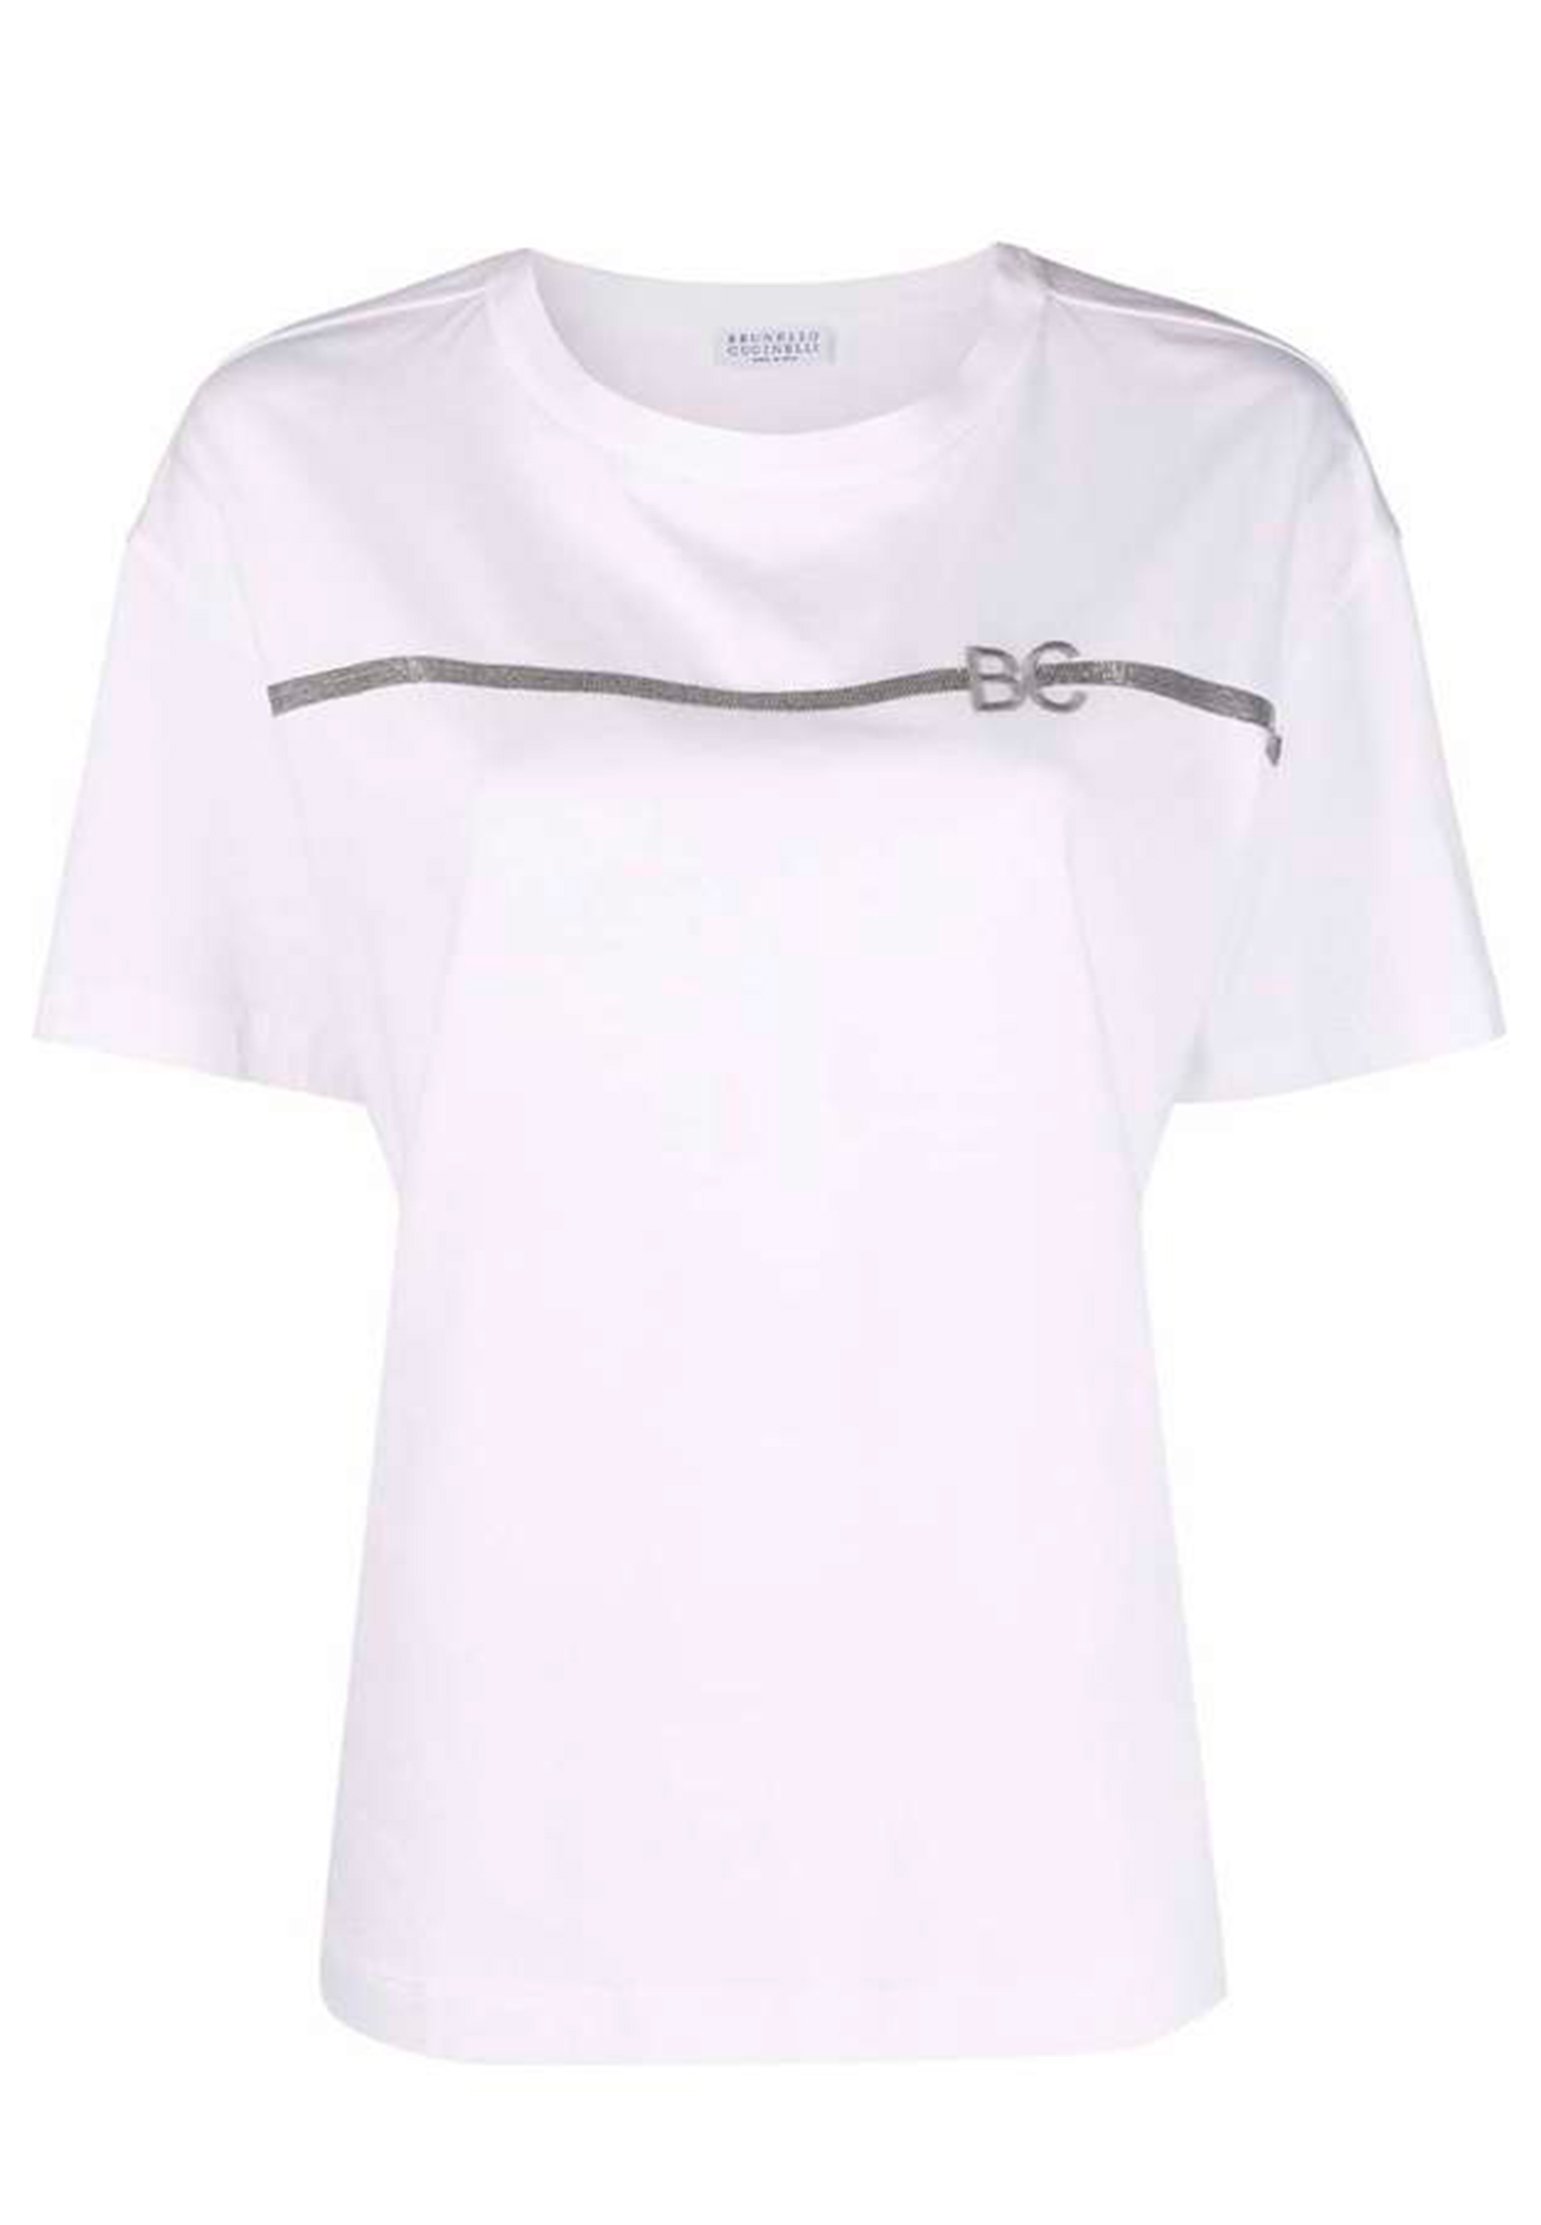 T-Shirt BRUNELLO CUCINELLI Color: white (Code: 264) in online store Allure